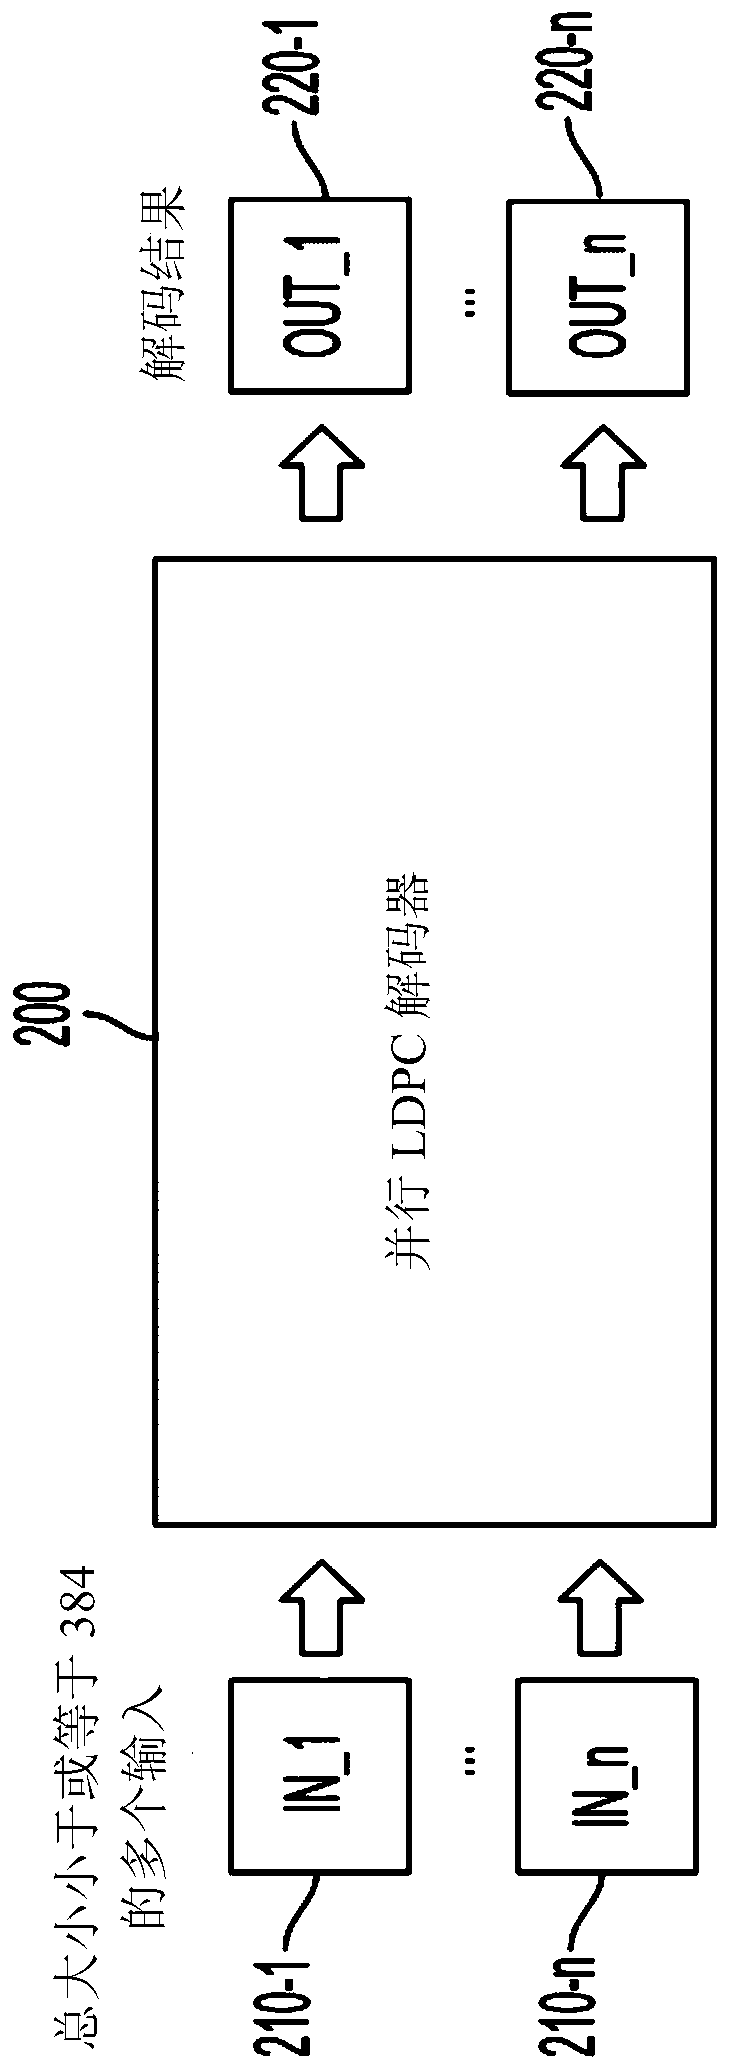 Parallel LDPC decoder